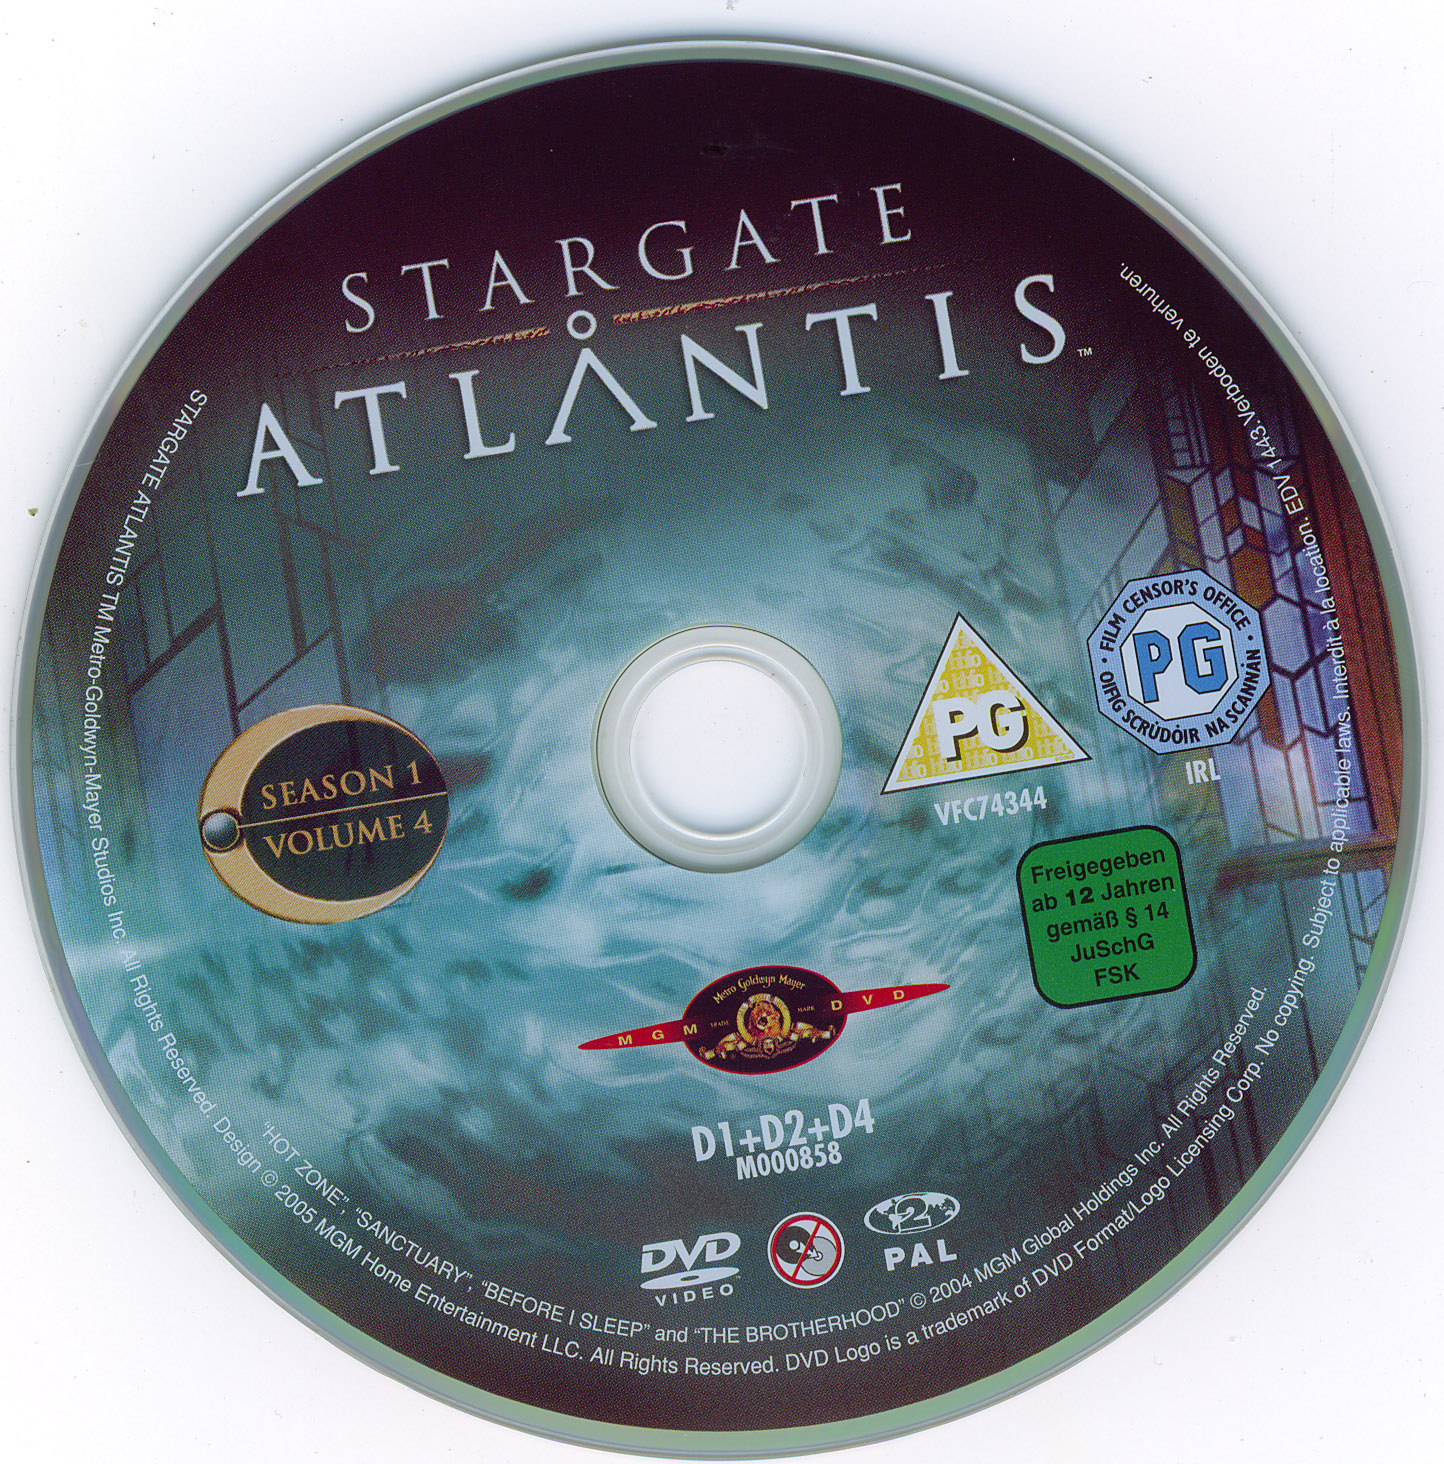 Stargate Atlantis saison 1 vol 4